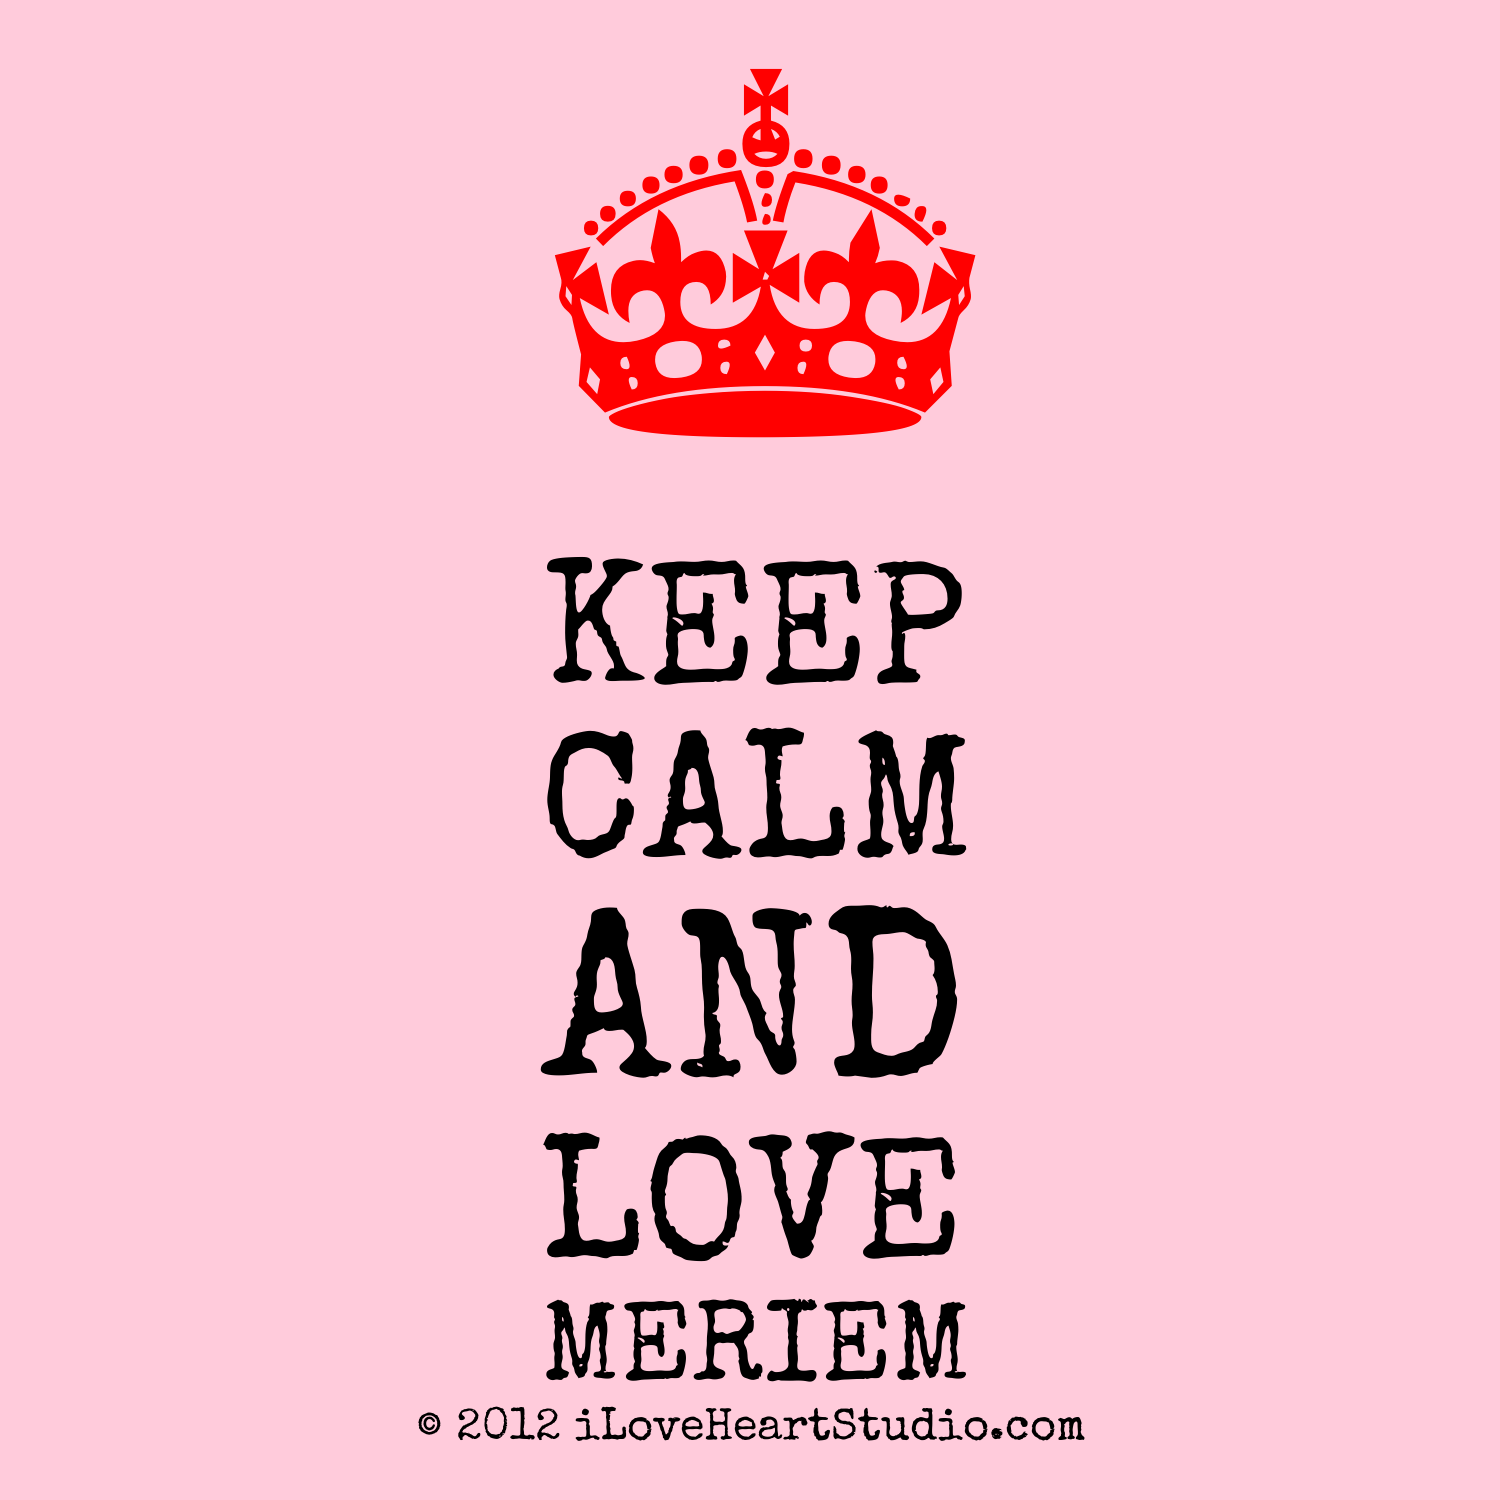 Crown] keep calm and love meriem' design on t-shirt, poster, mug ...